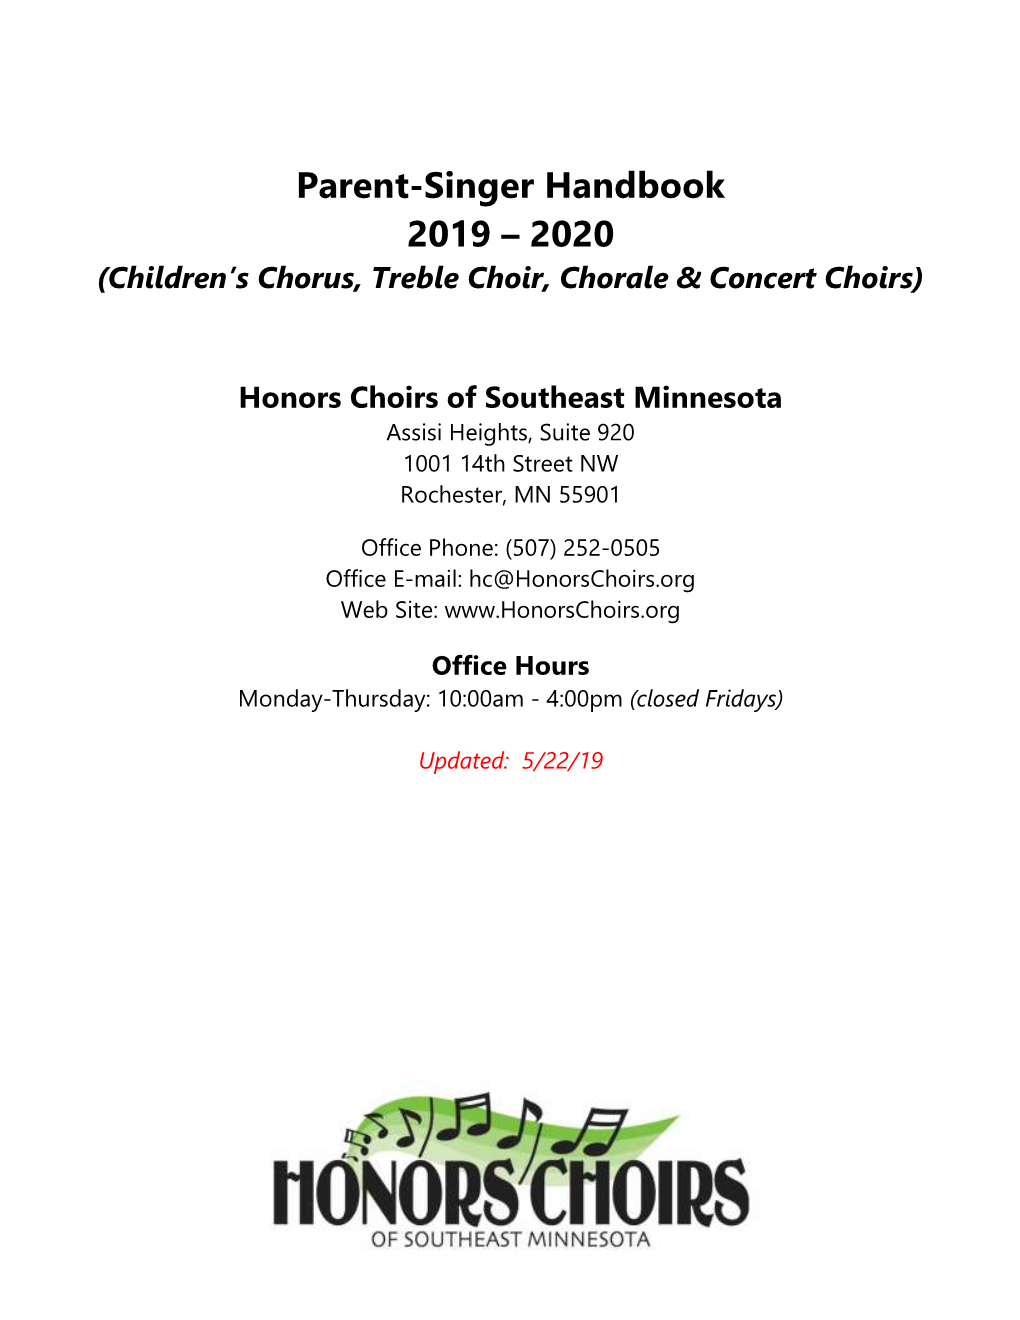 Parent-Singer Handbook 2019 – 2020 (Children’S Chorus, Treble Choir, Chorale & Concert Choirs)